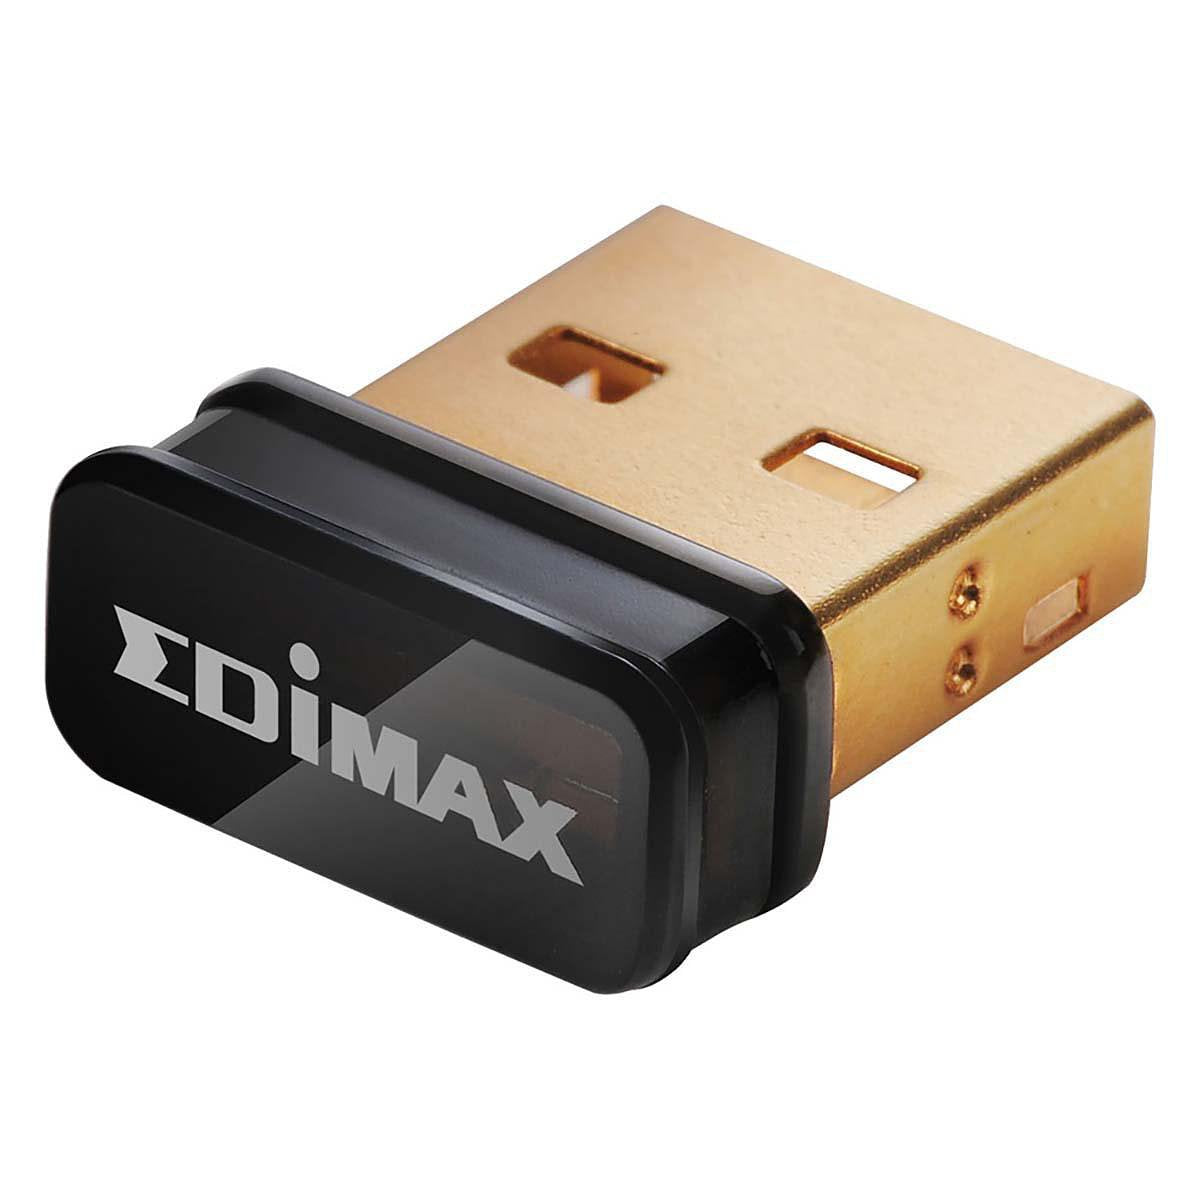 Edimax Draadloze Wi-Fi & Bluetooth Dongel